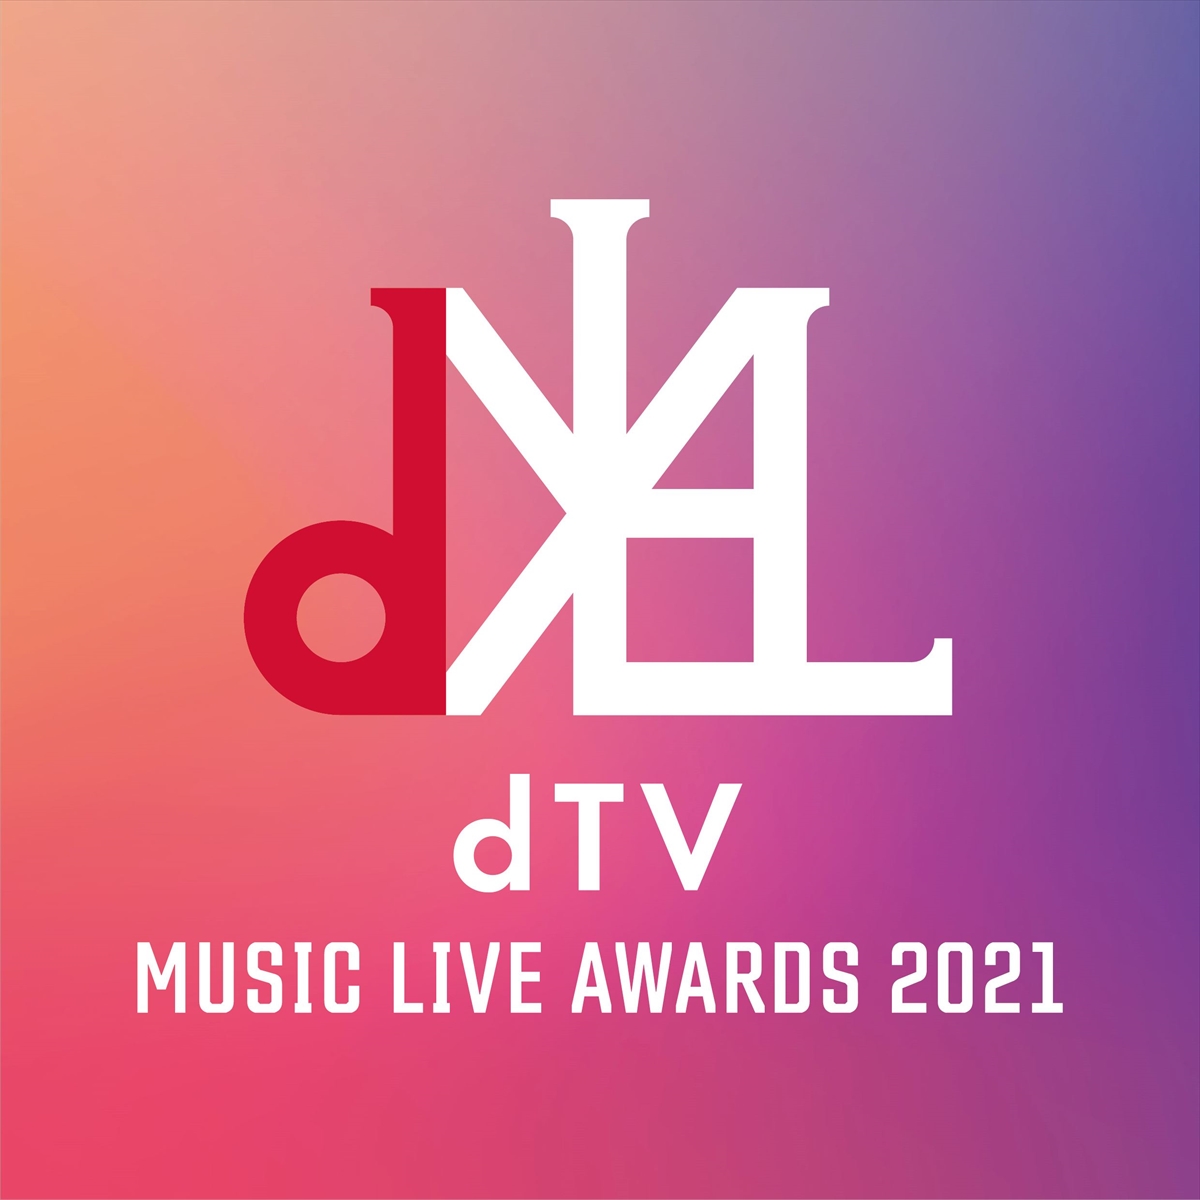 「dTV MUSIC LIVE AWARDS 2021」